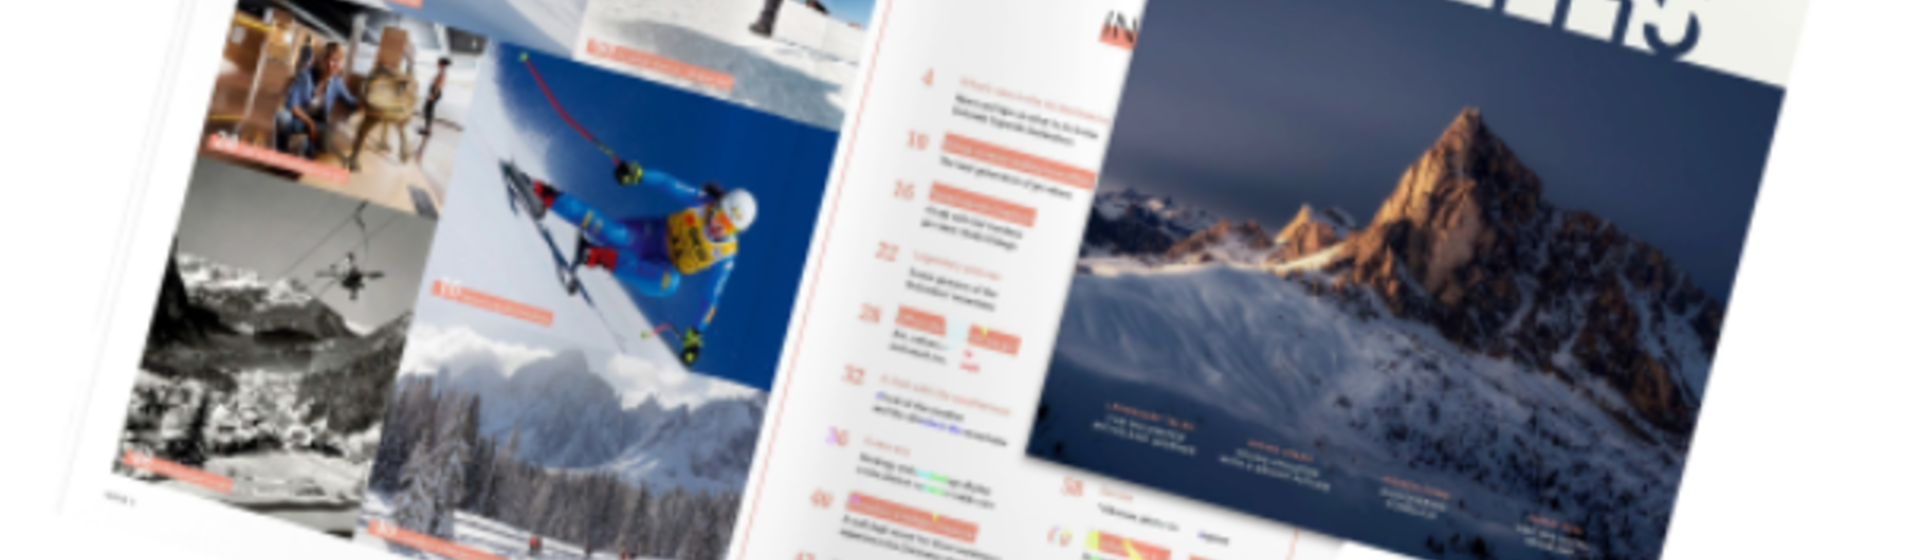 Dolomiti SuperSki winter 2022-23 magazine is ready to read